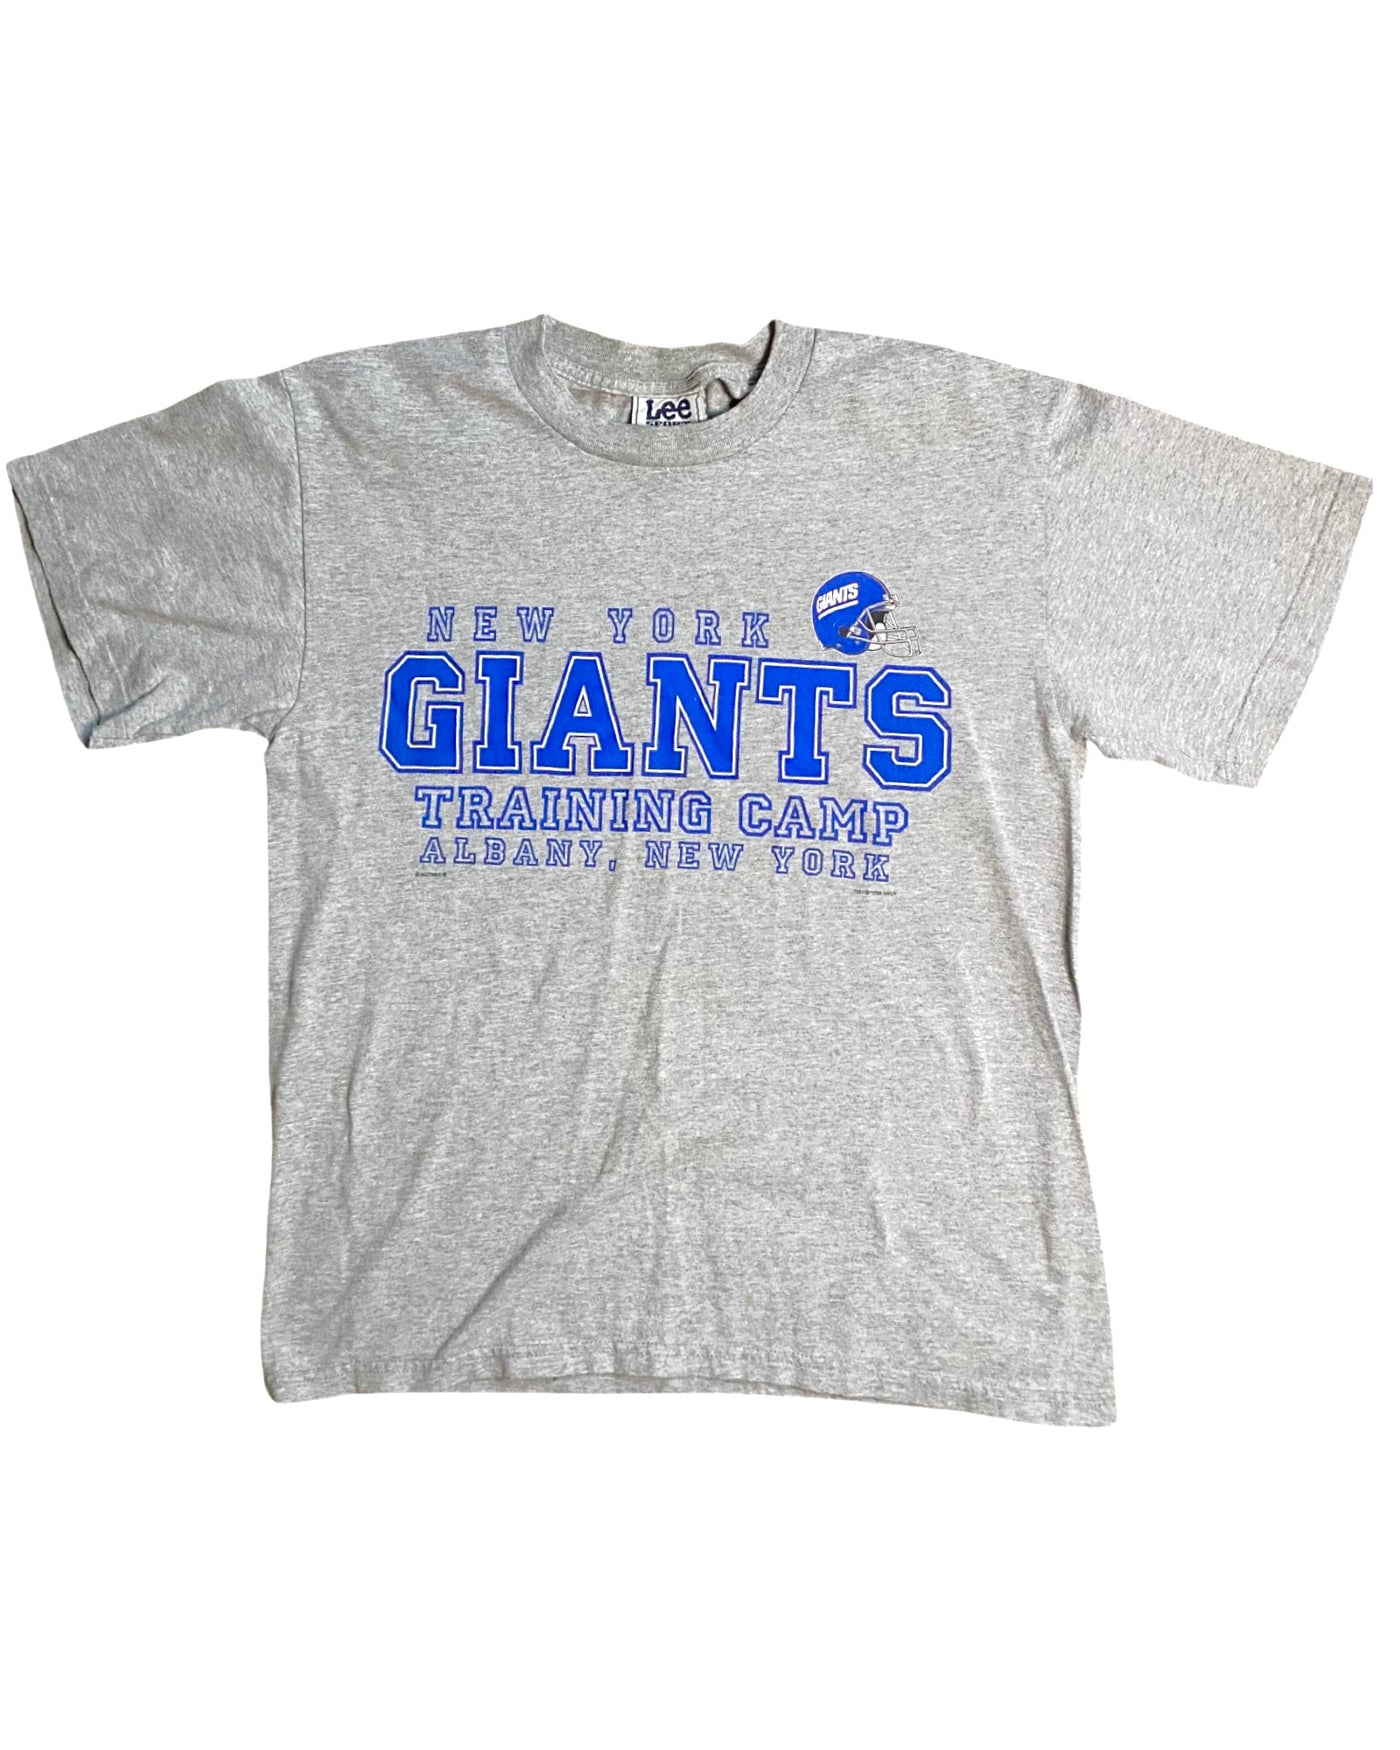 Vintage 1998 New York Giants Training Camp T-Shirt